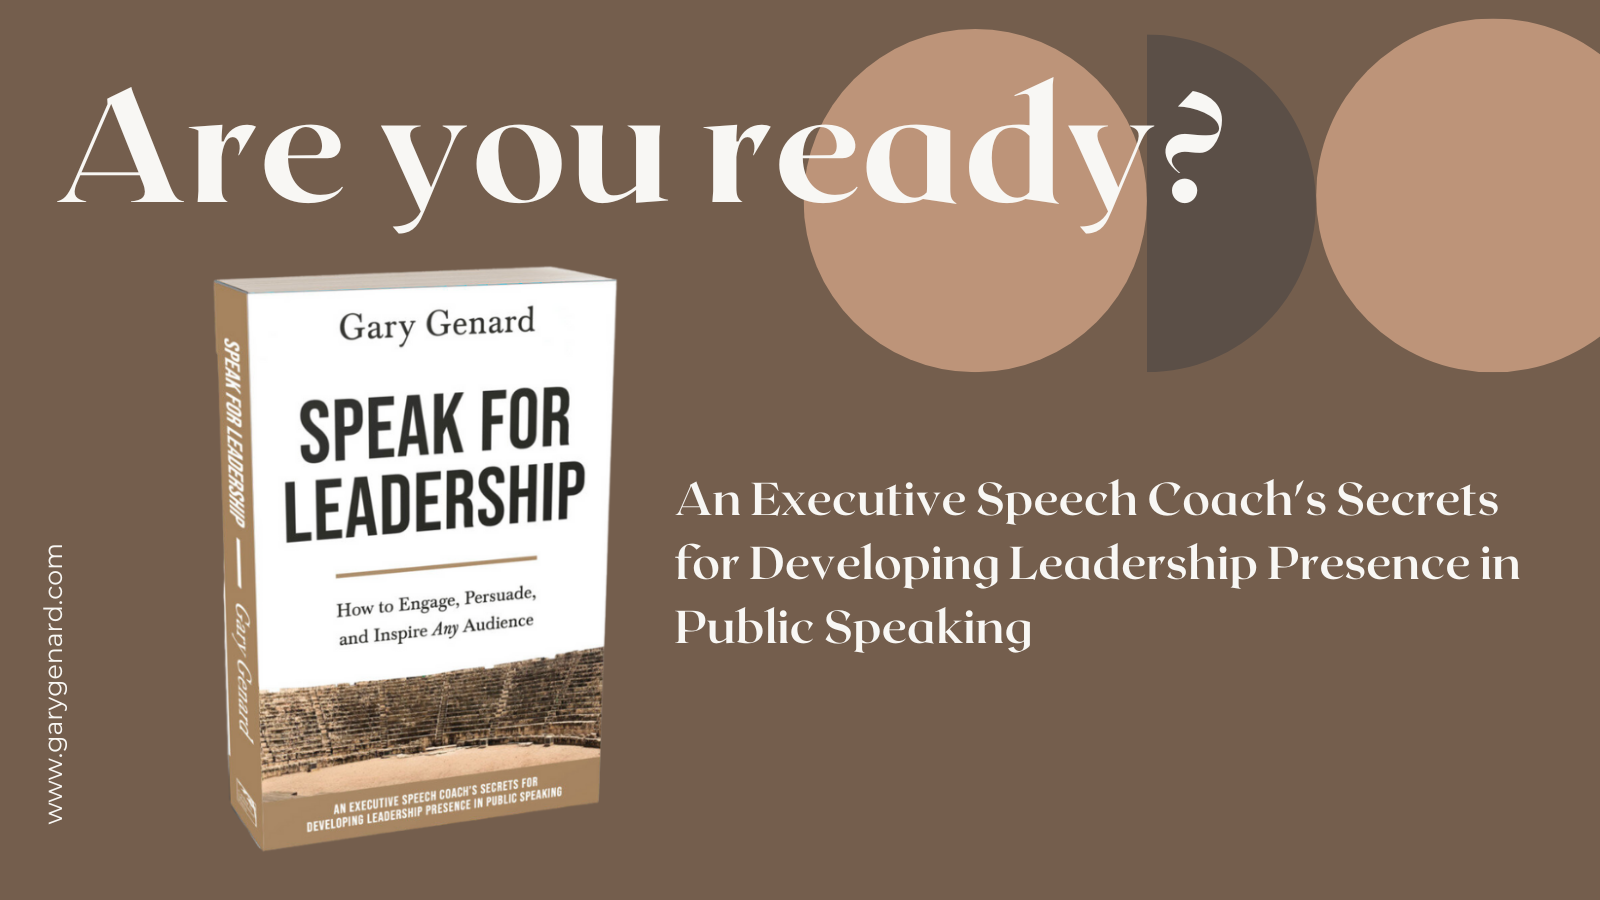 Dr. Gary Genard's book on speaking as a leader, Speak for Leadership.